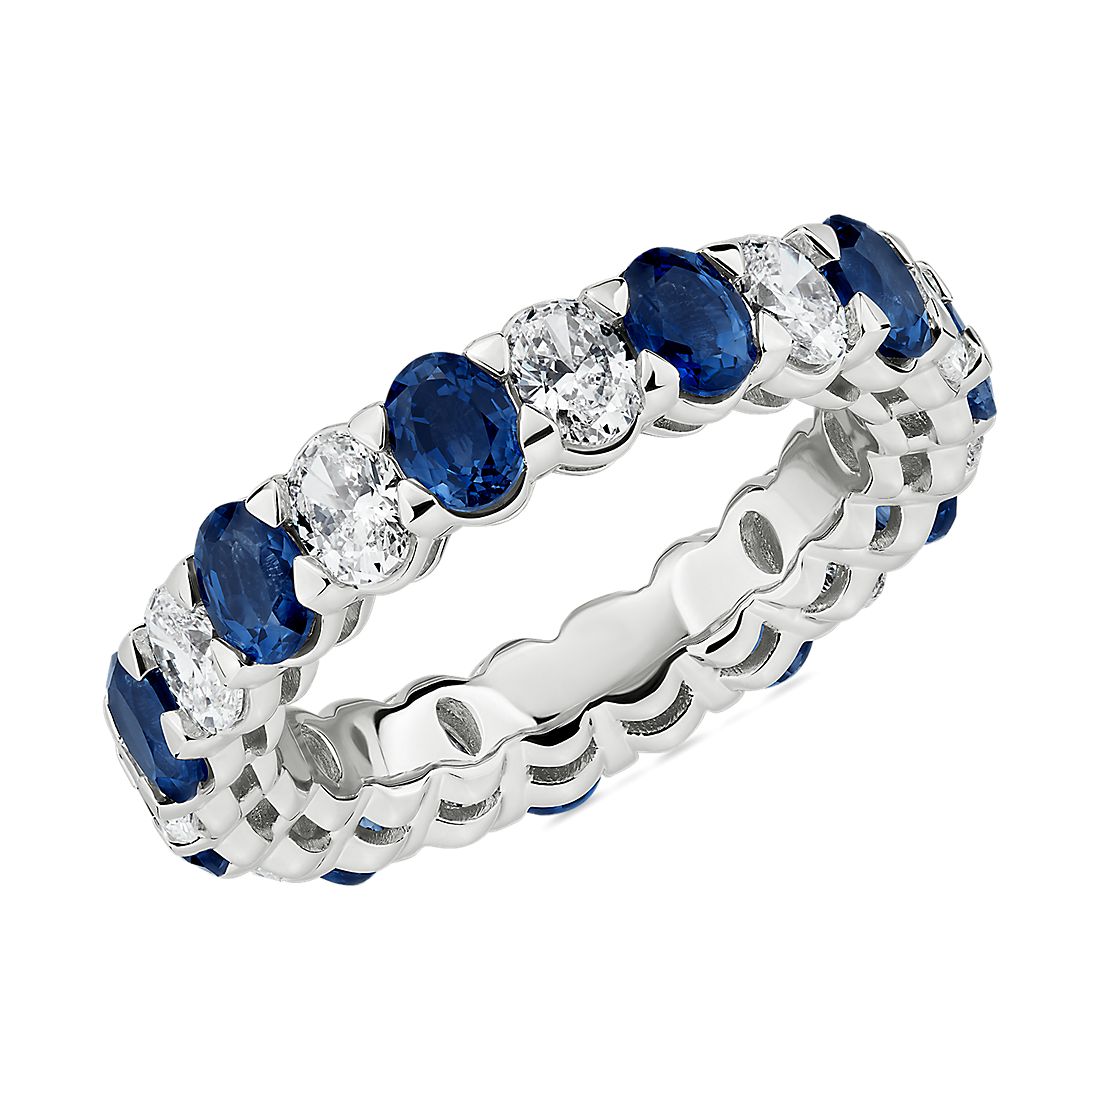 Blue Nile Studio Seamless Alternating Oval Cut Diamond and Sapphire Eternity Ring in Platinum- G/VS2 (1.38 ct. tw.)